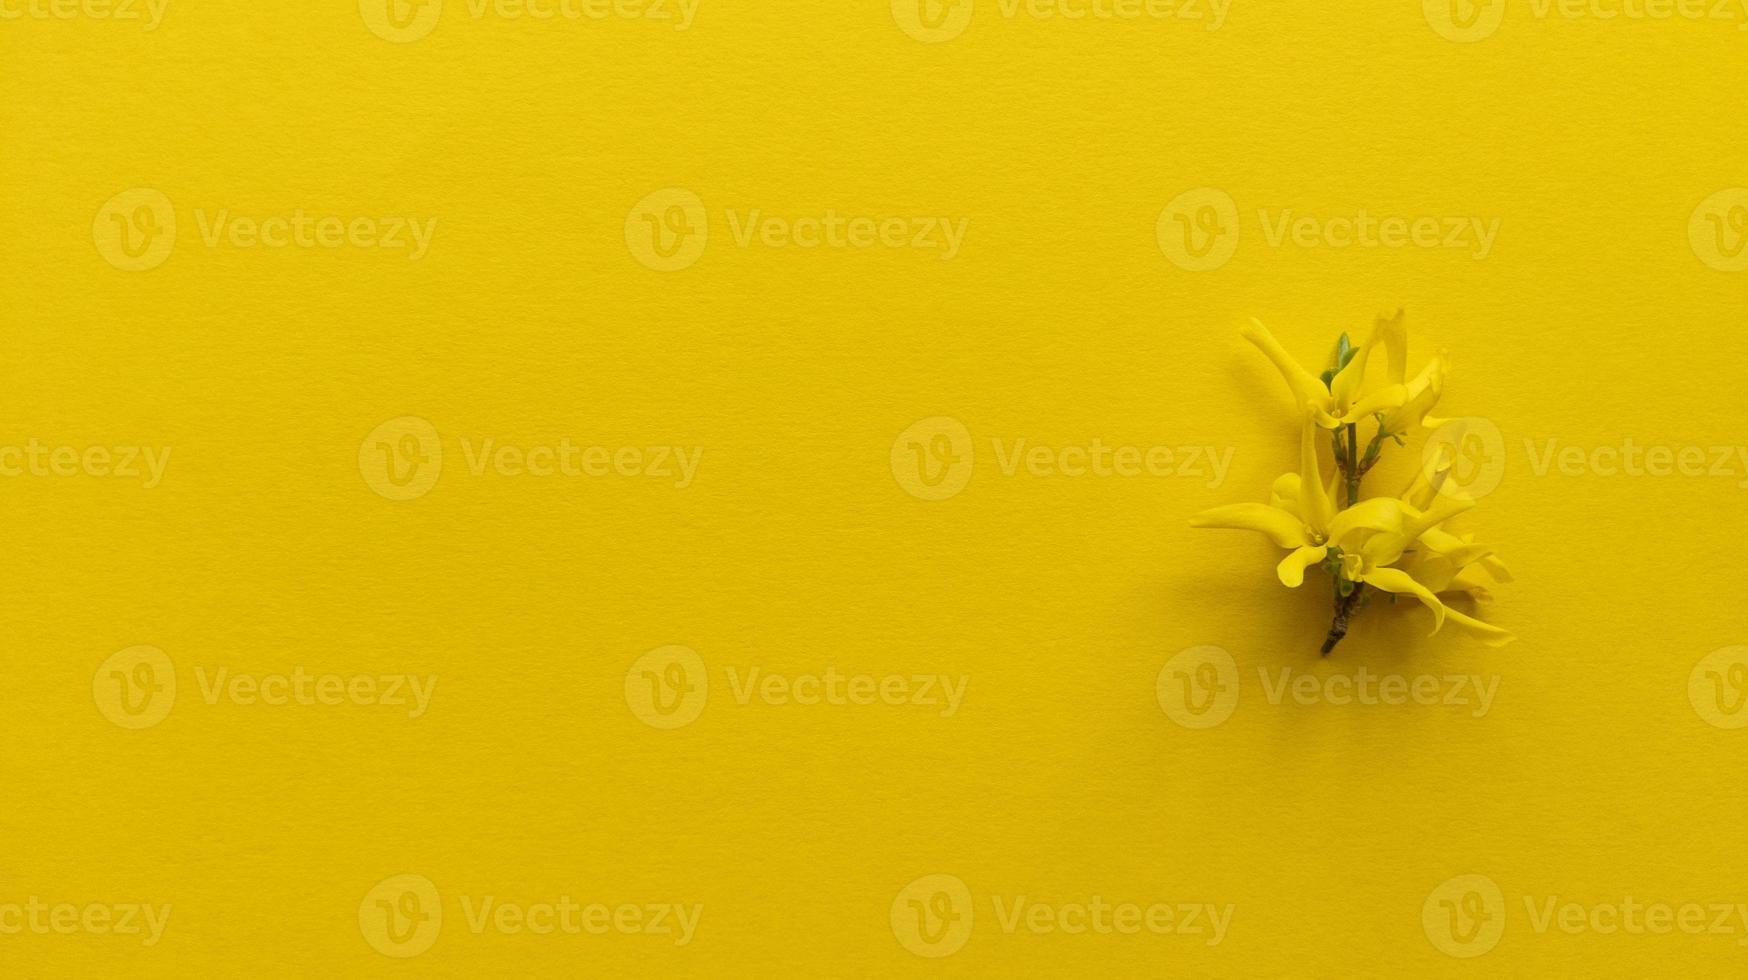 gul blomma forsythia maluch på gul bakgrund monokrom enkel platt låg med pastell textur mode eco koncept stock foto